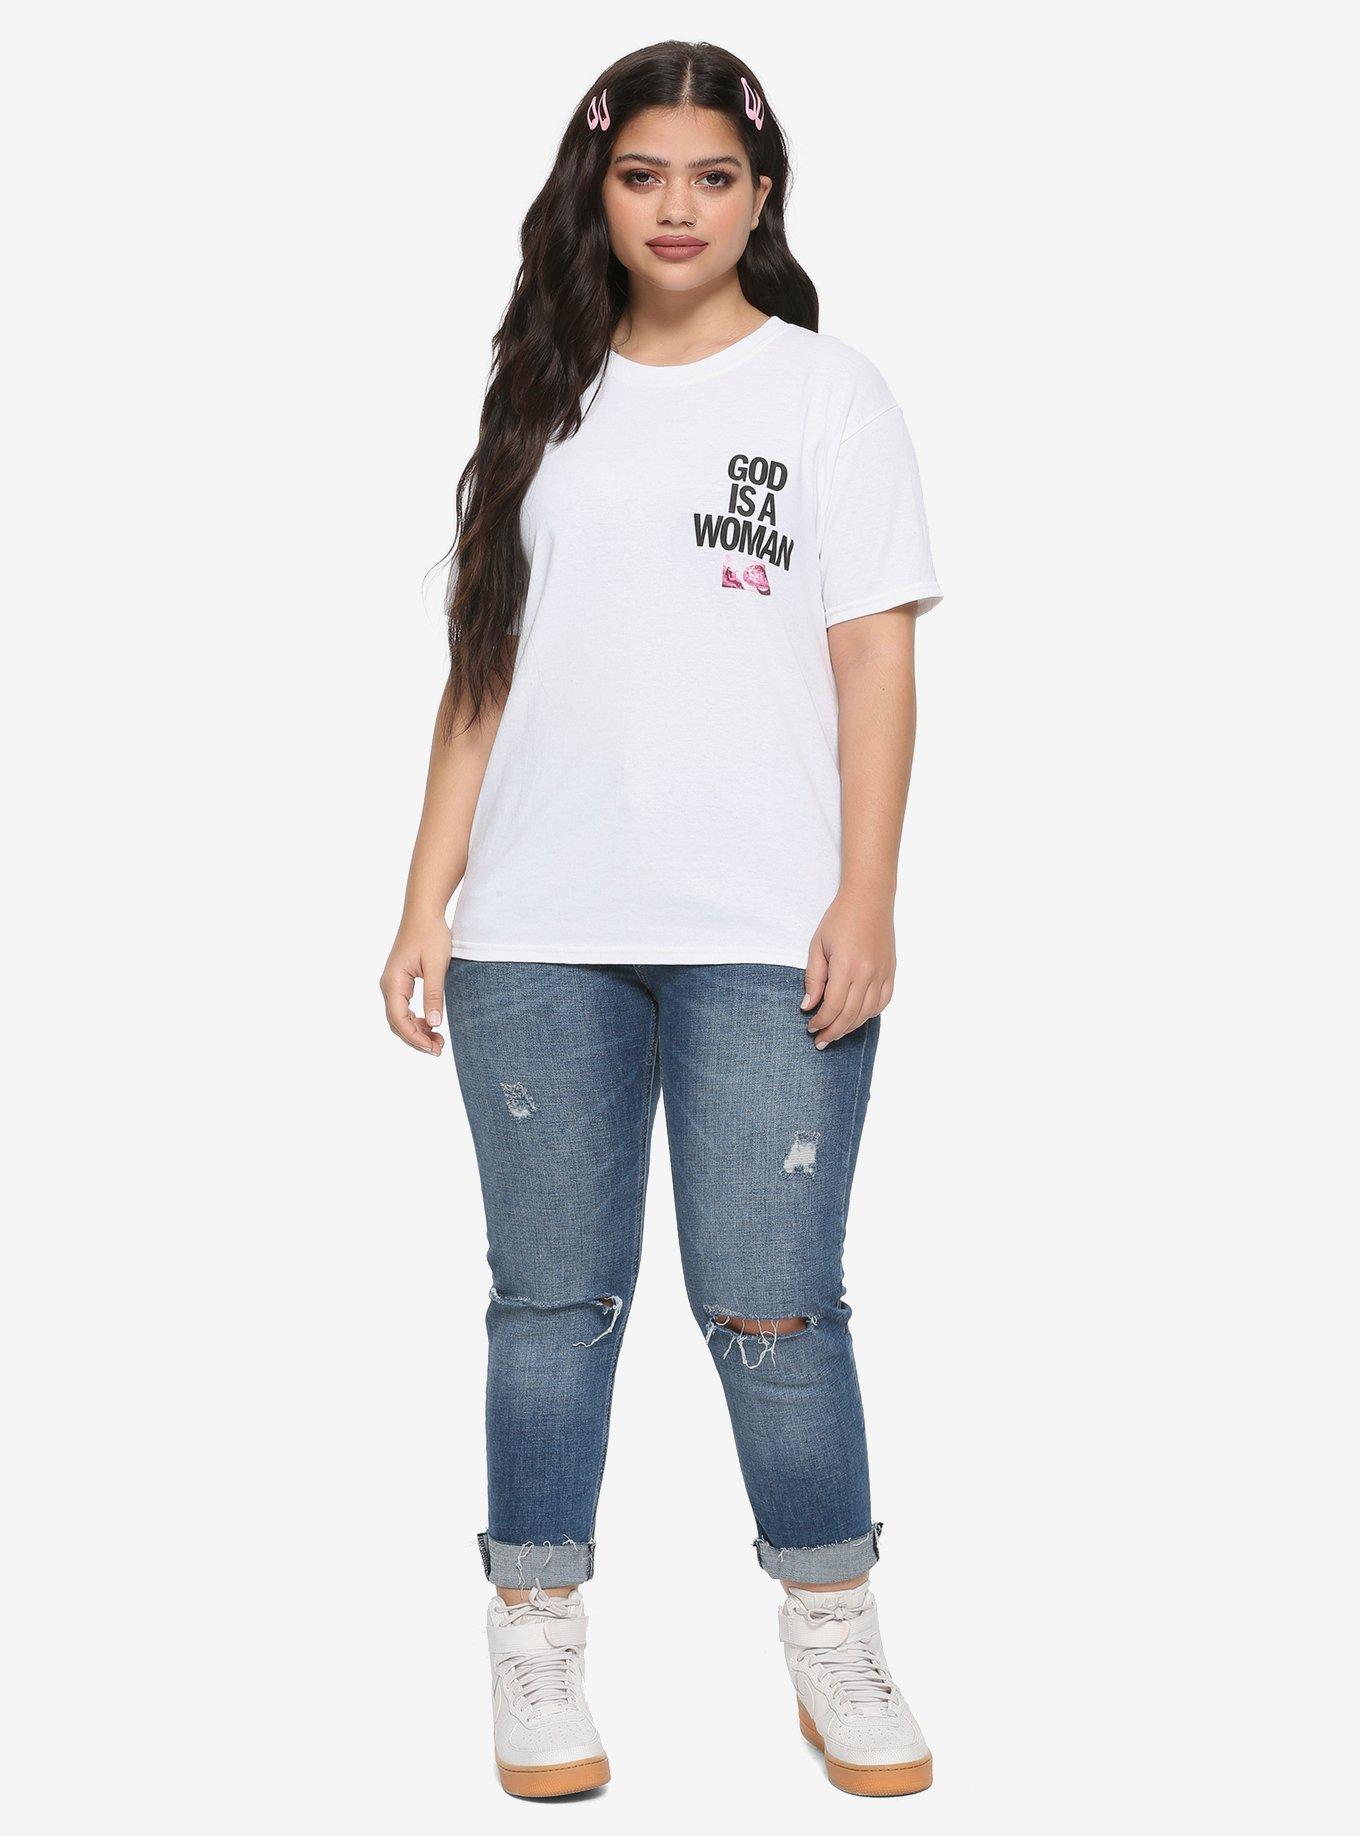 Ariana Grande God Is A Woman Girls T-Shirt, WHITE, alternate